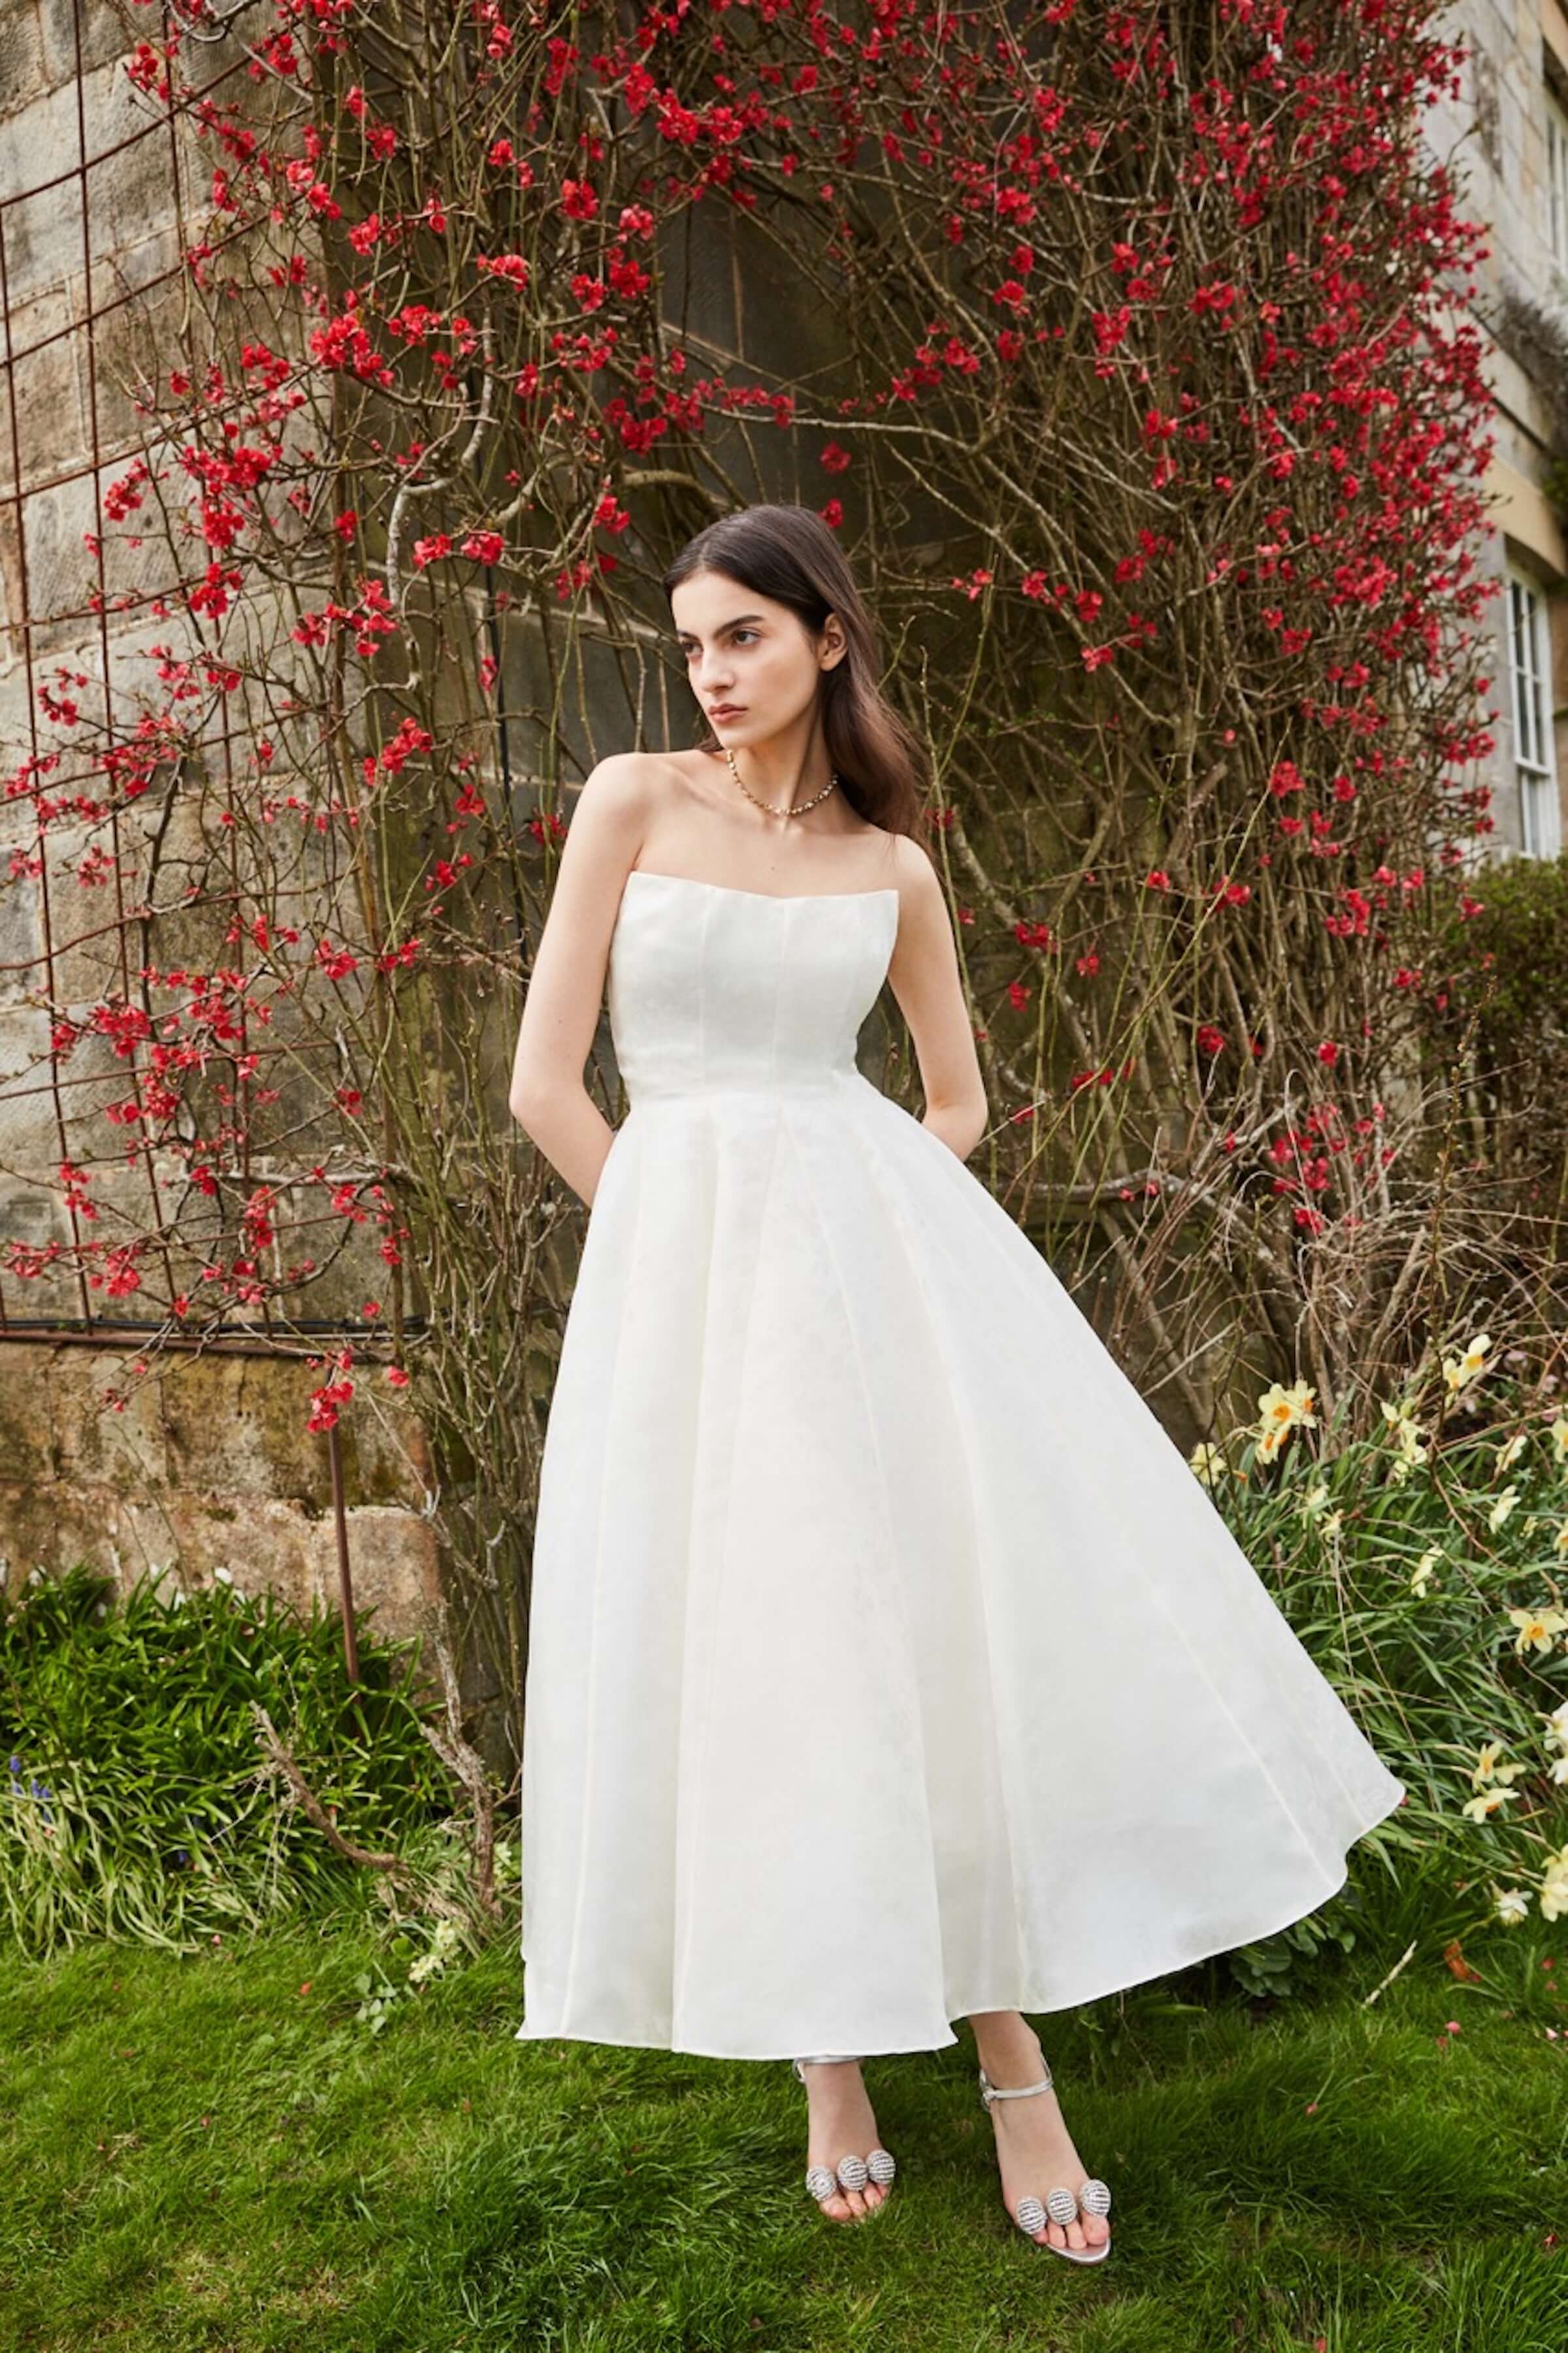 white jacquard dress